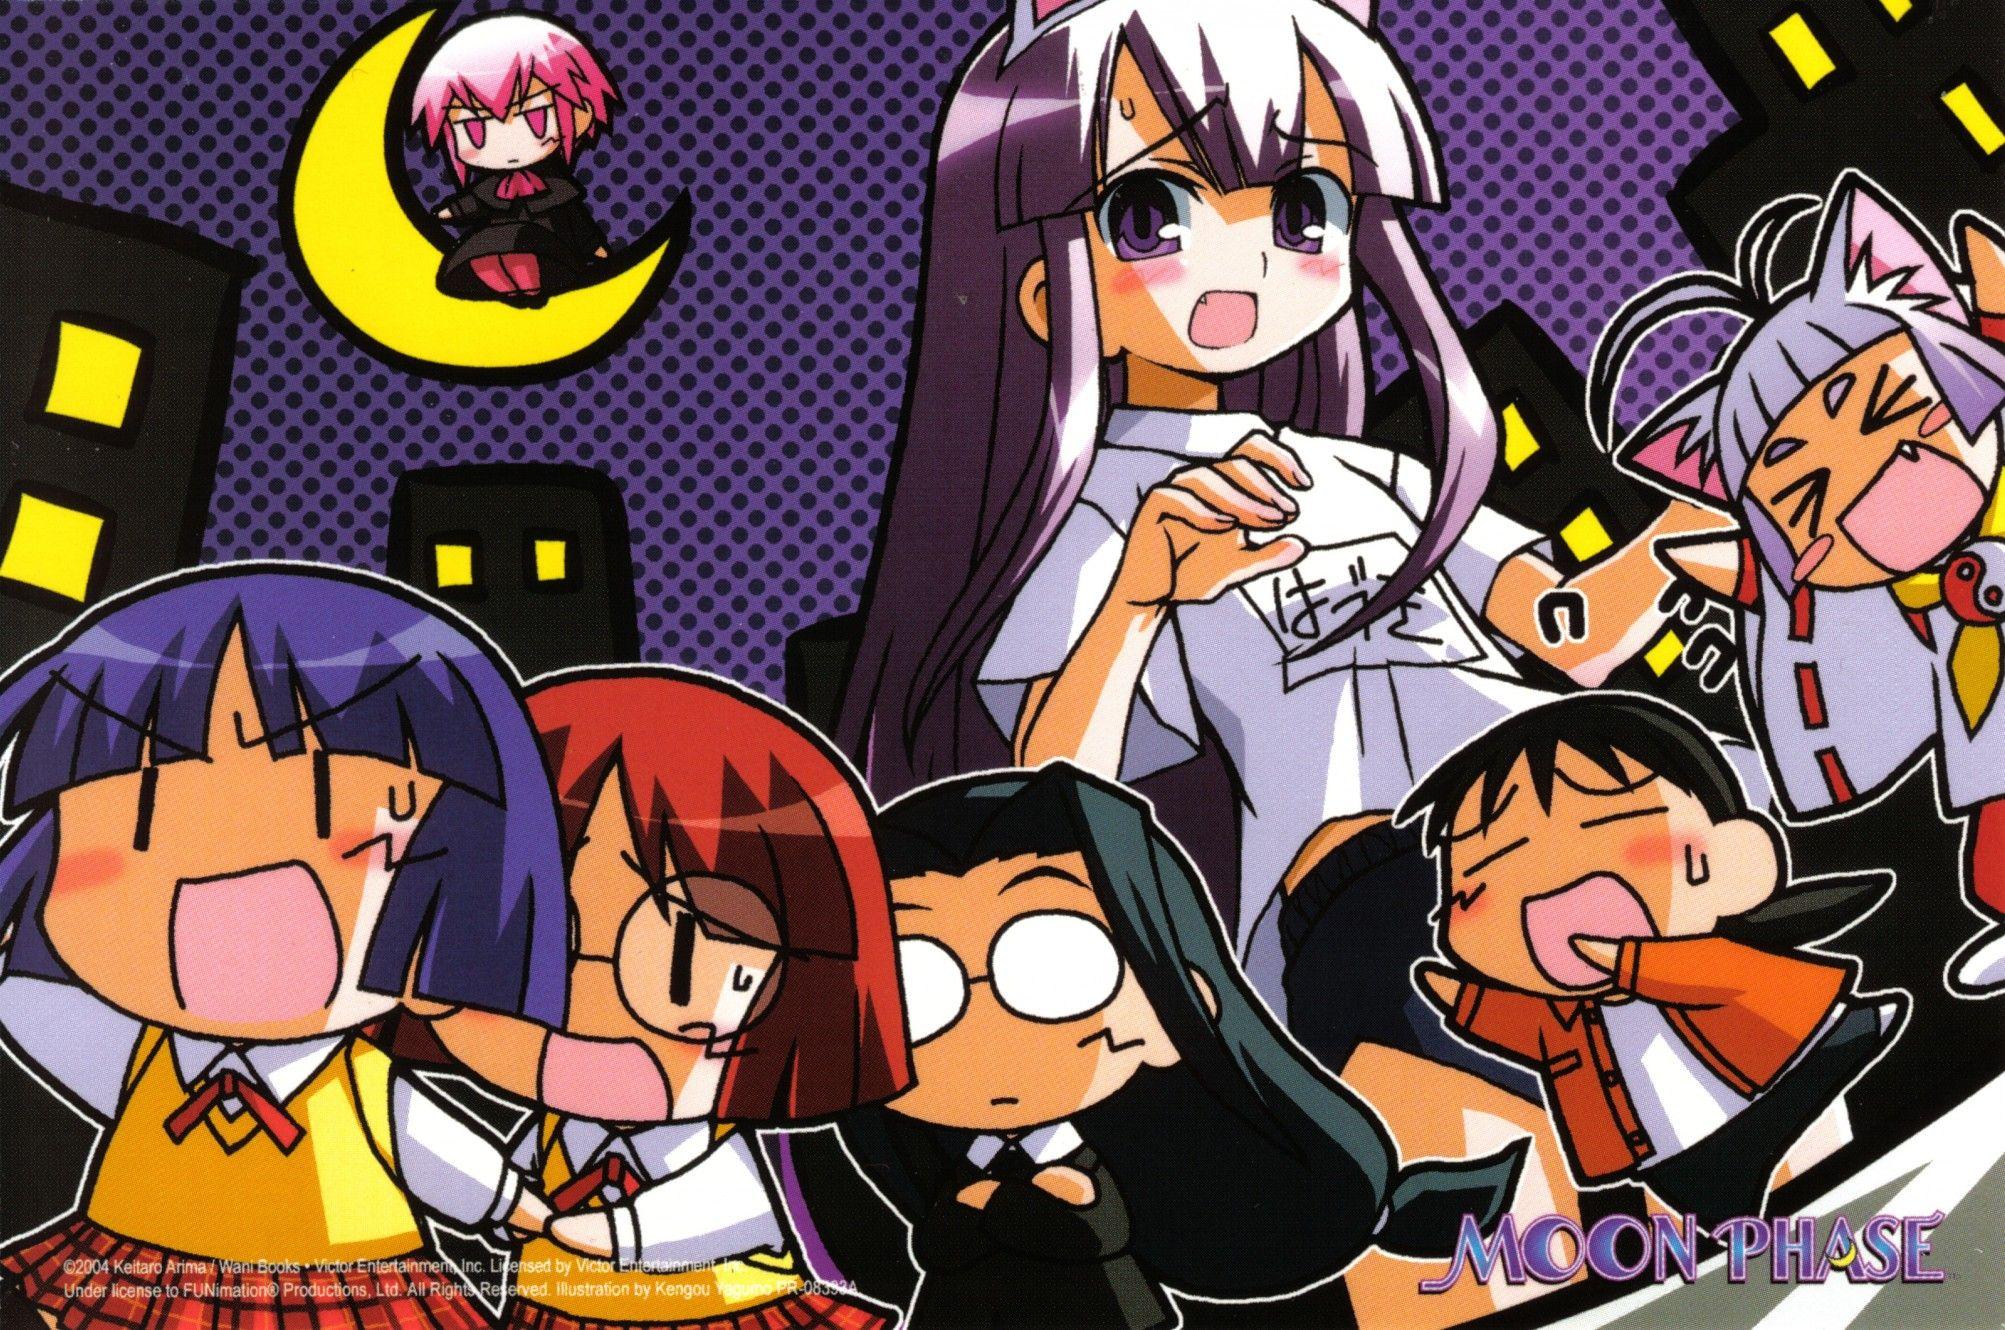 Tsukuyomi Moon Phase. Free Anime Wallpaper Site